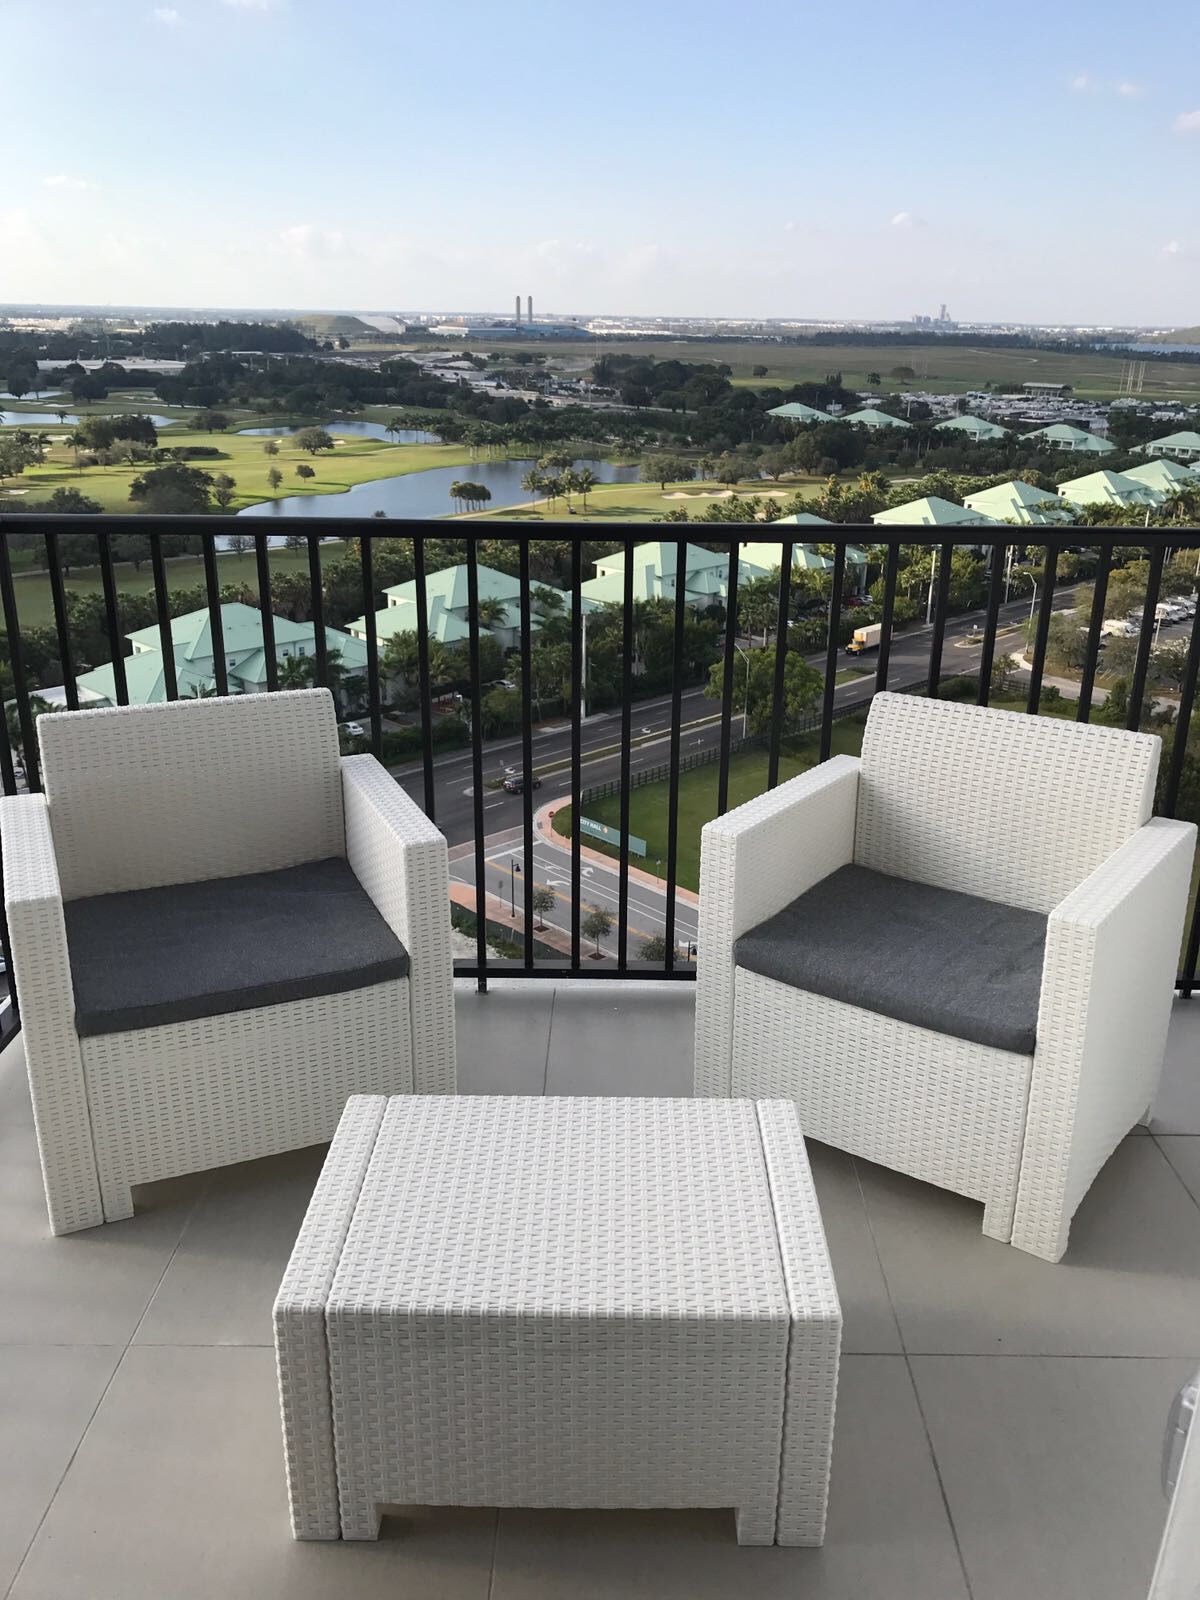 NEW Furniture / Patio furniture / outdoor furniture/ Muebles de patio /patio set /conversation set